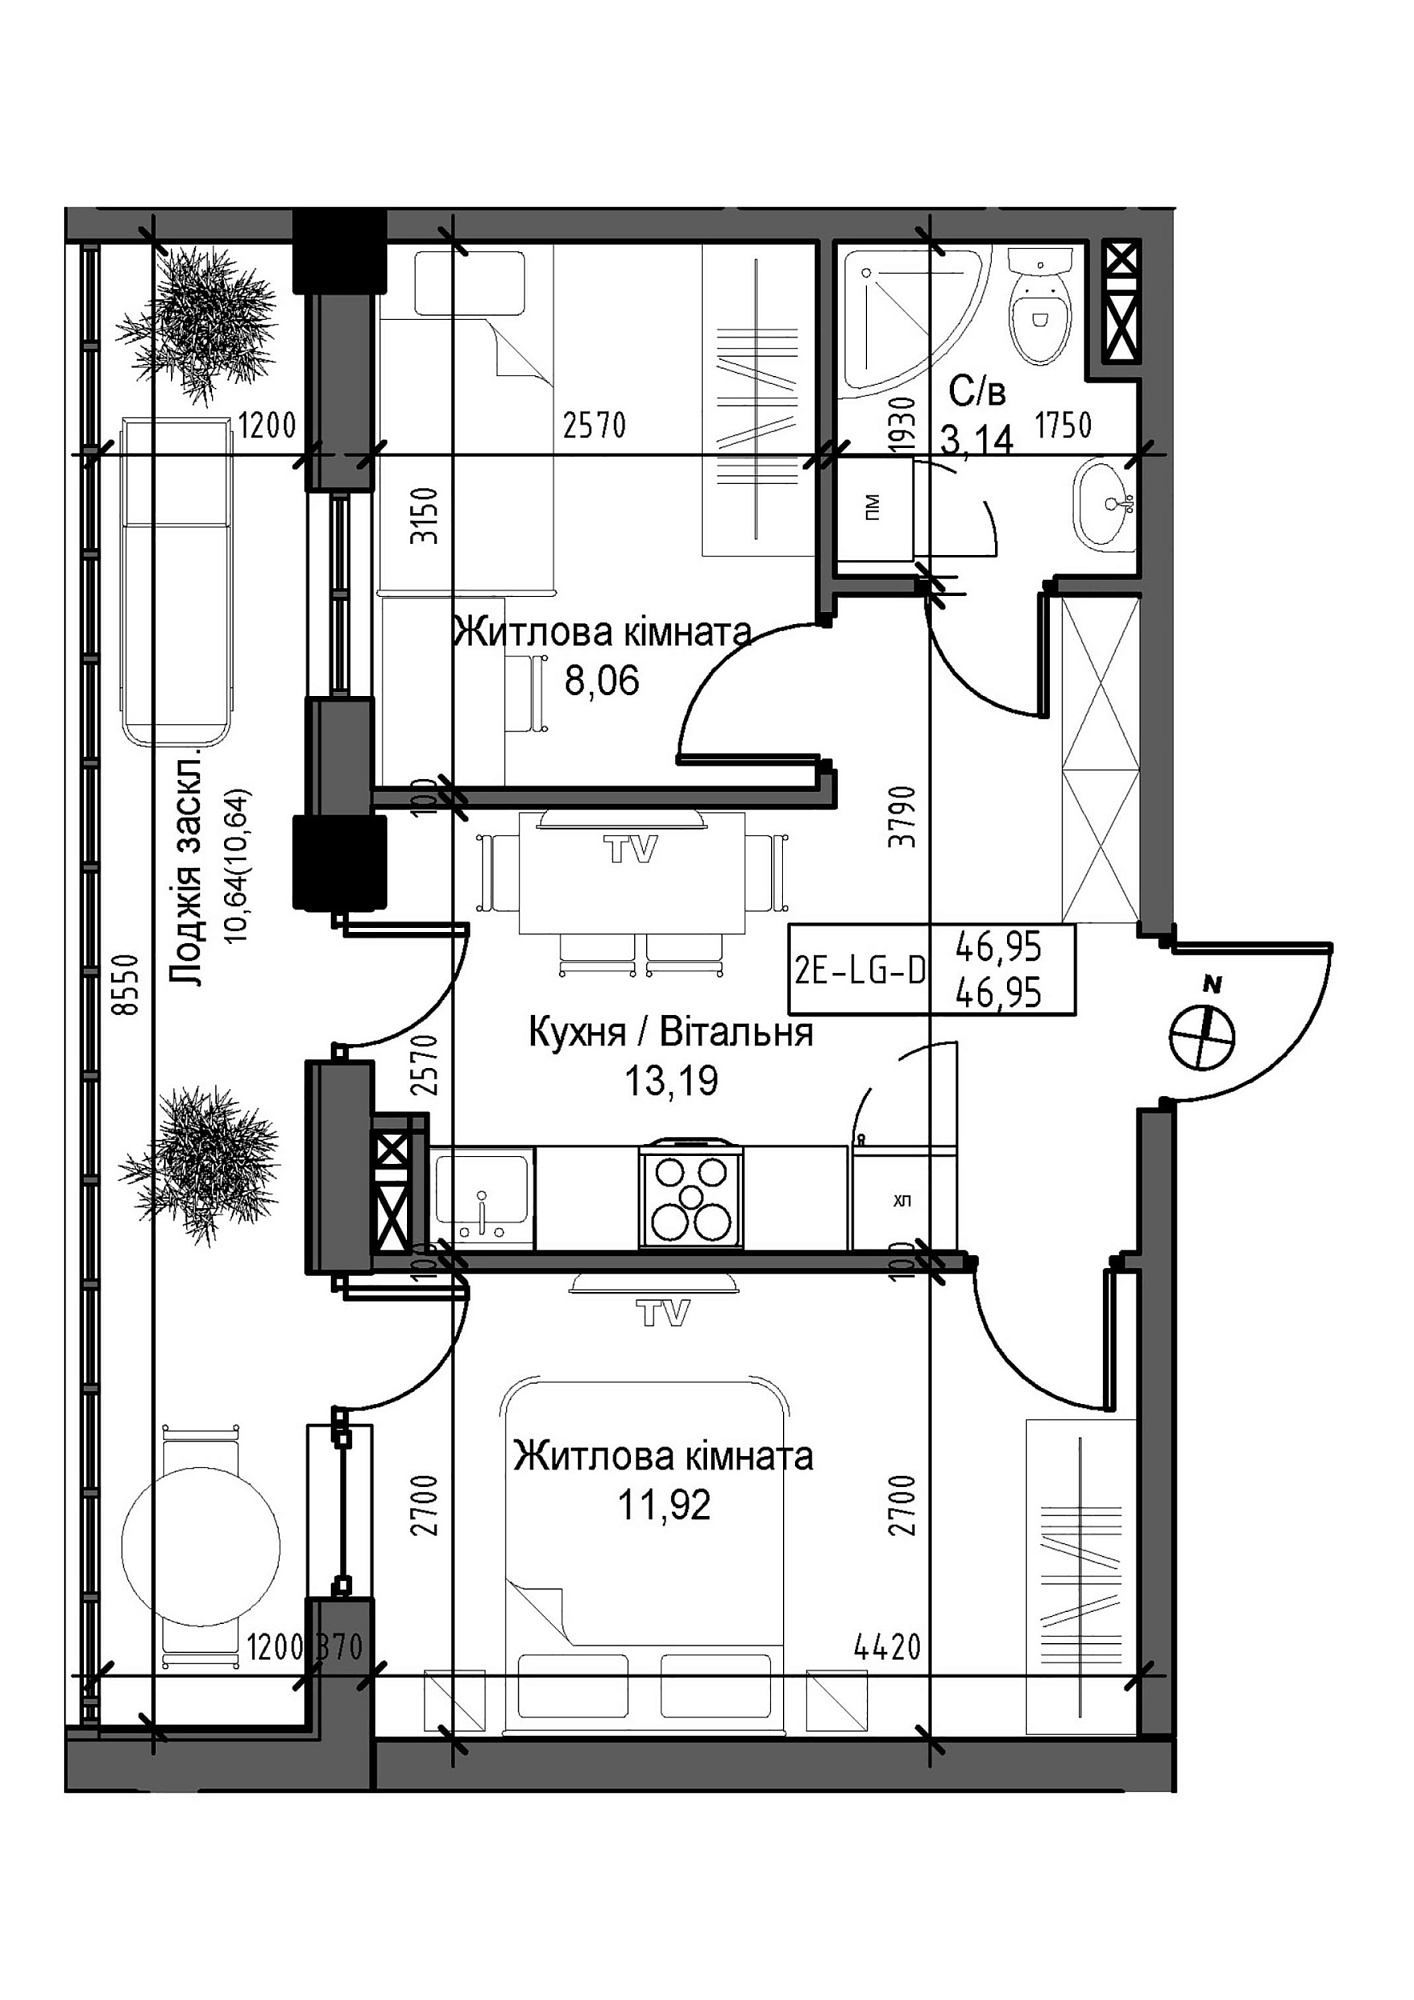 Planning 2-rm flats area 46.95m2, UM-007-03/0001.